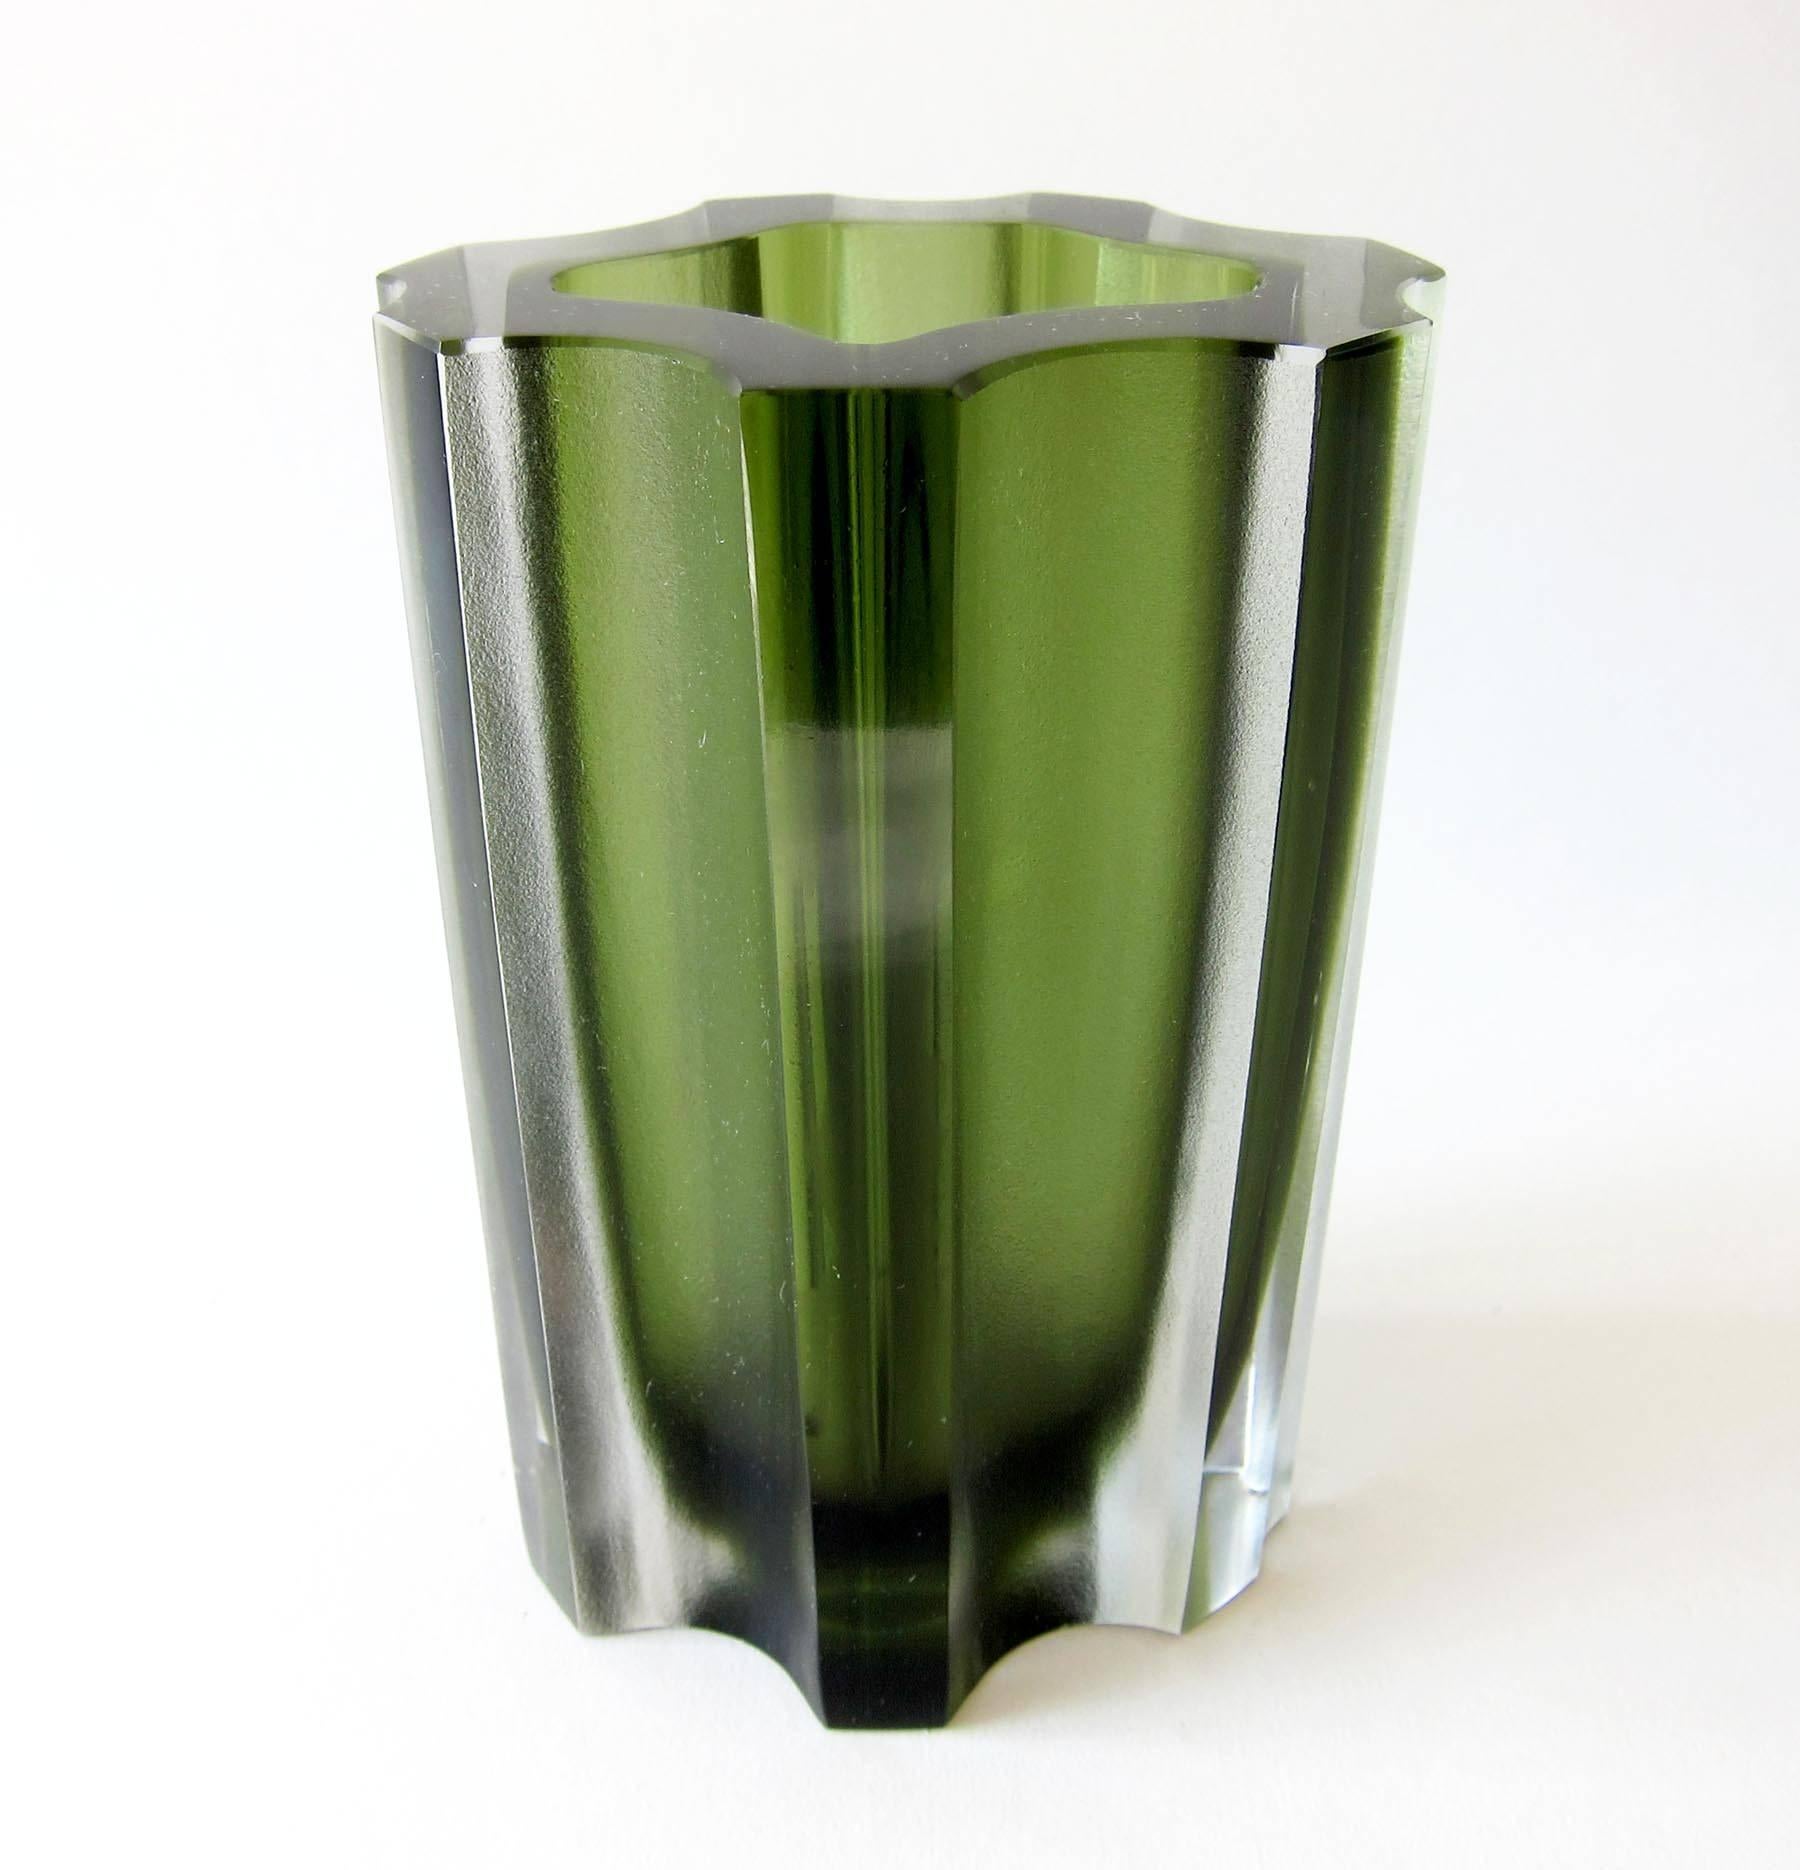 Mold blown, sandblasted and polished vase by Tapio Wirkkala for Iittala of Finland. Vase measures 7.75